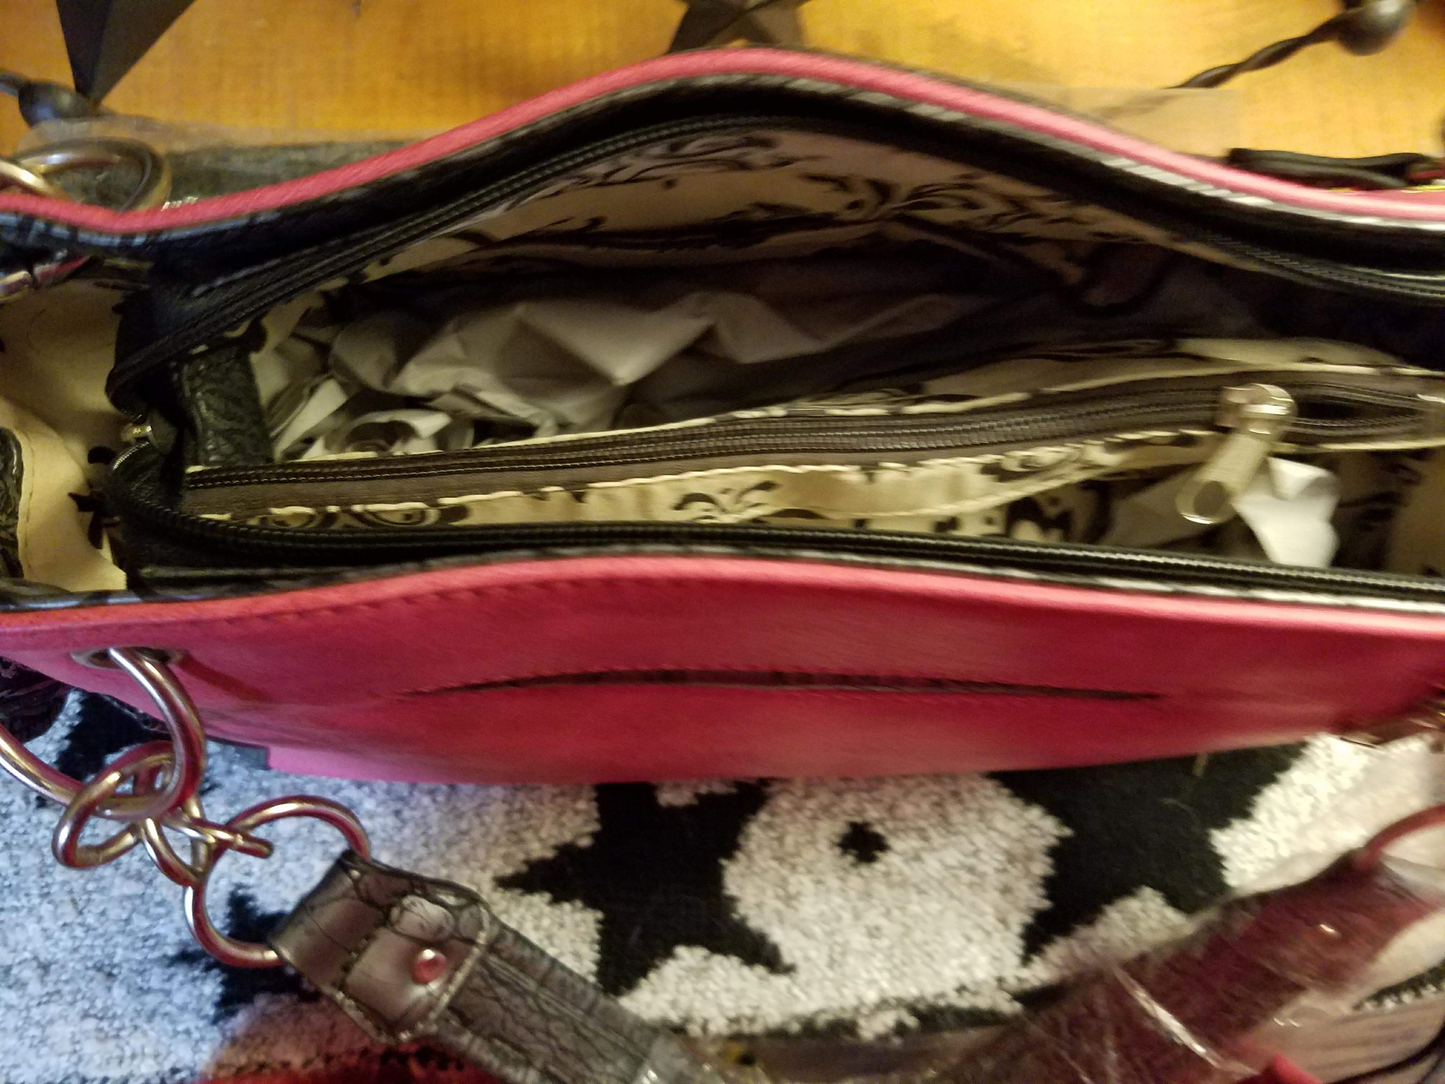 Western Sugar Skull Bling Purse Matching Wallet Pink Black Concealed Carry